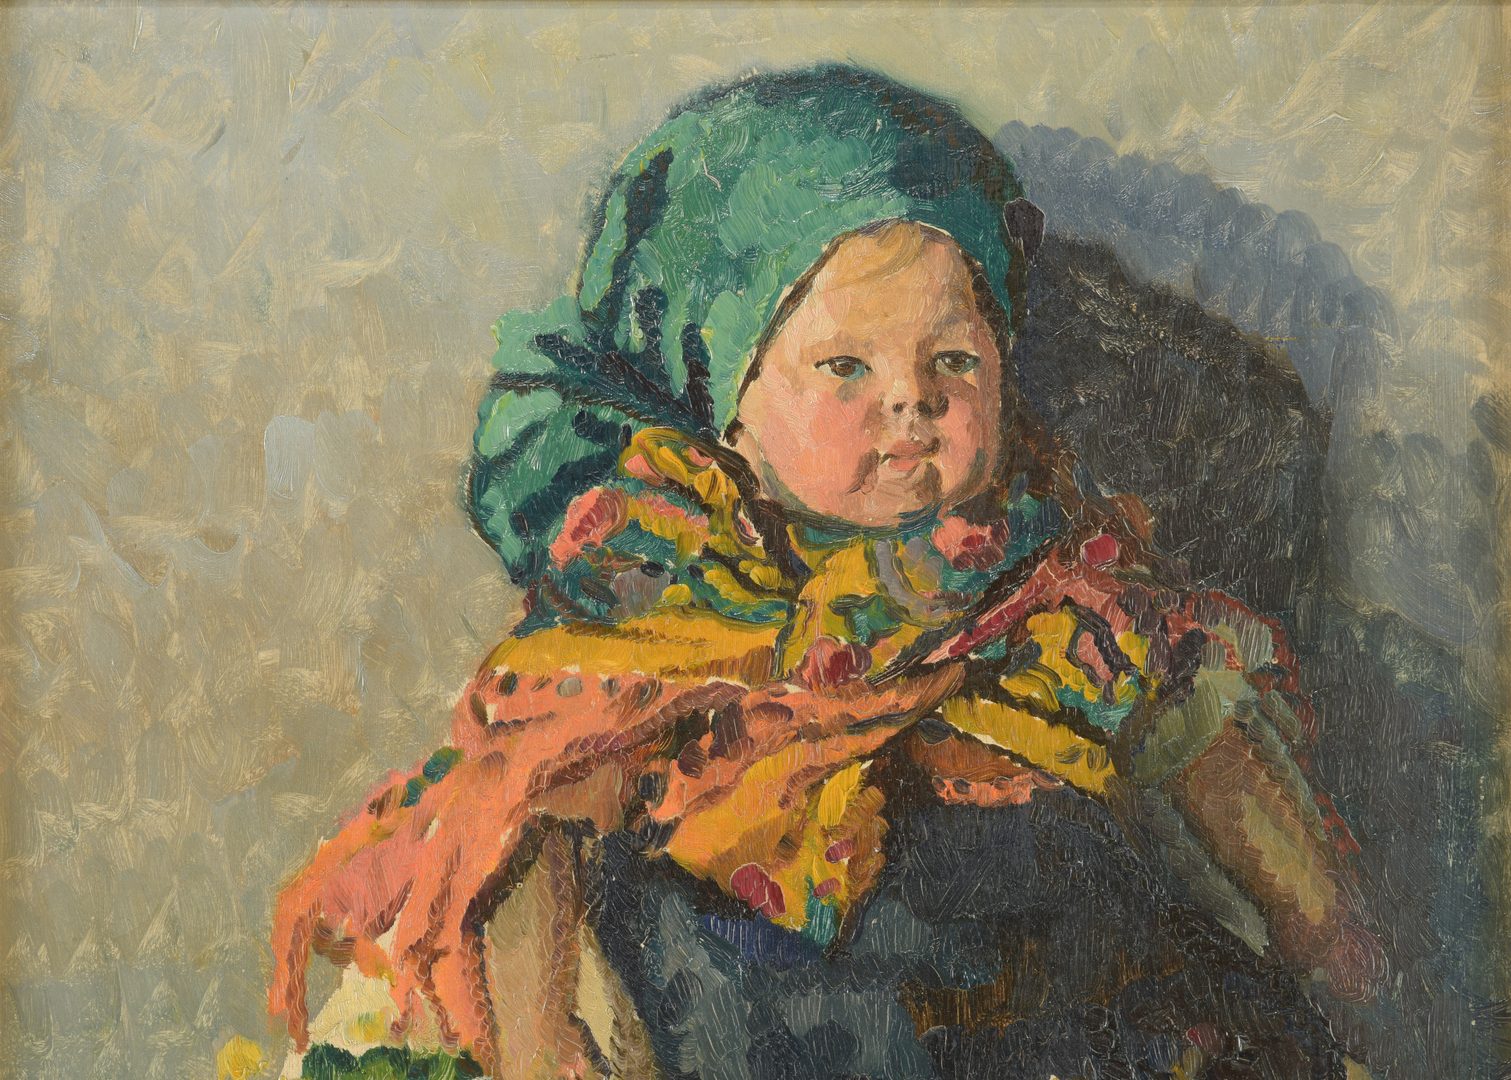 Lot 434: Ritta Boemm O/B Portrait of Young Peasant Girl